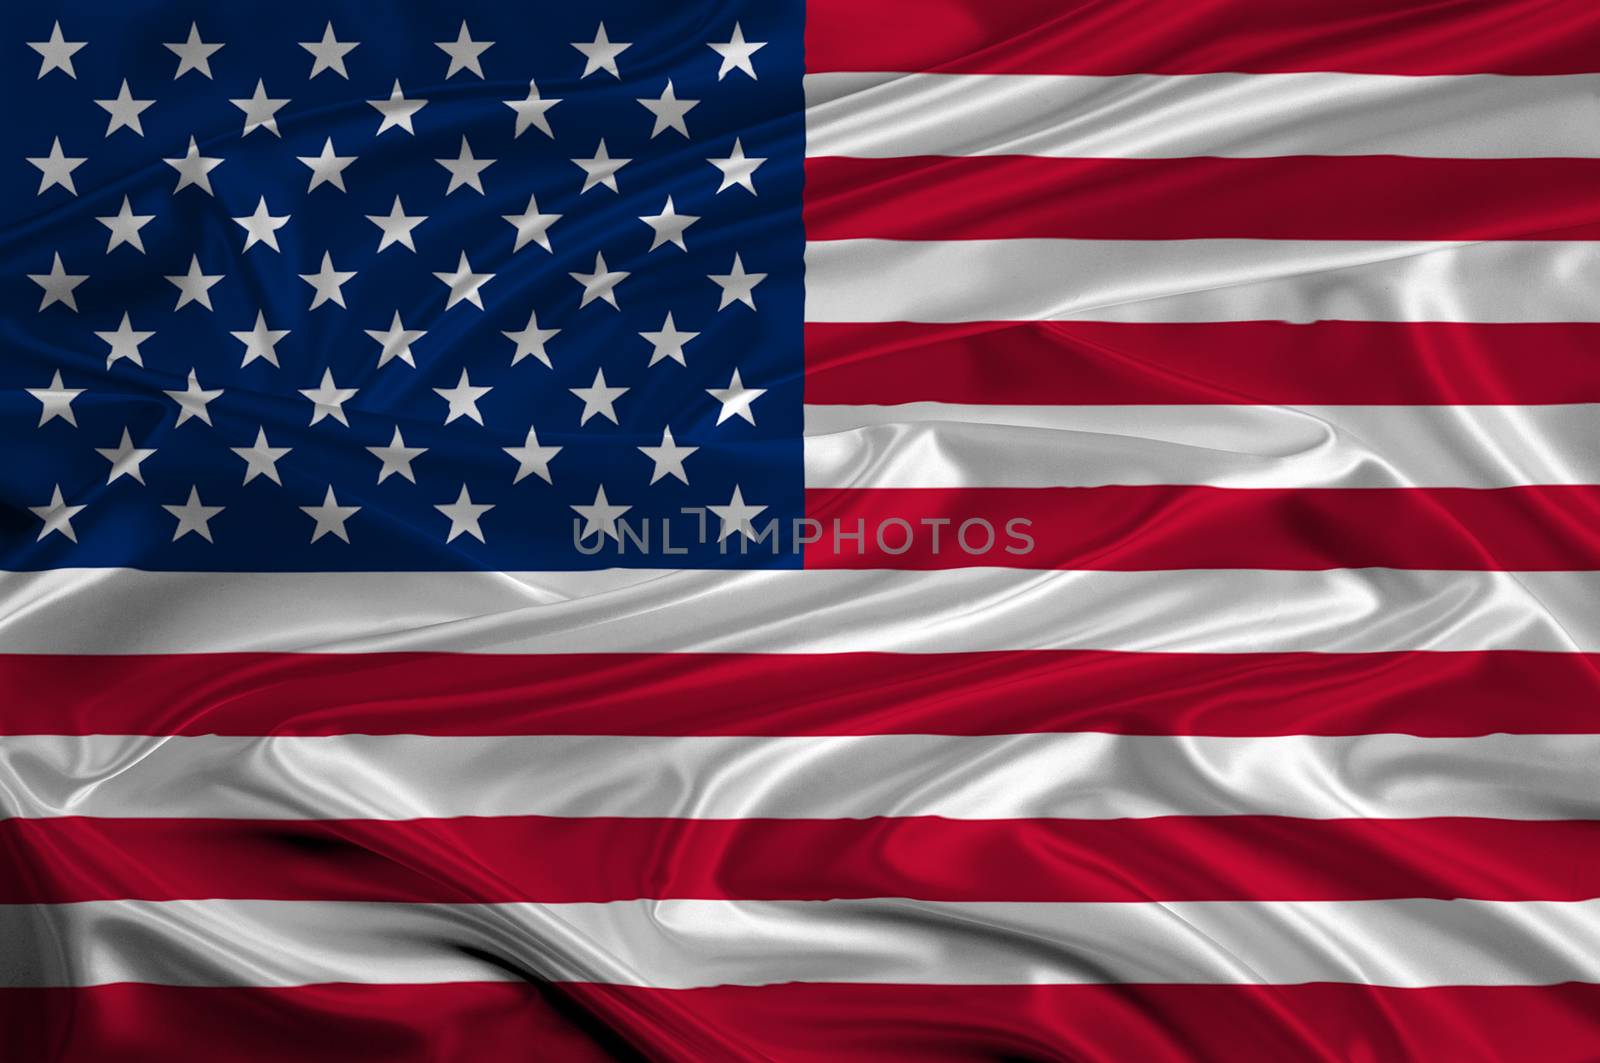 Closeup photo- Ntional flag of the USA